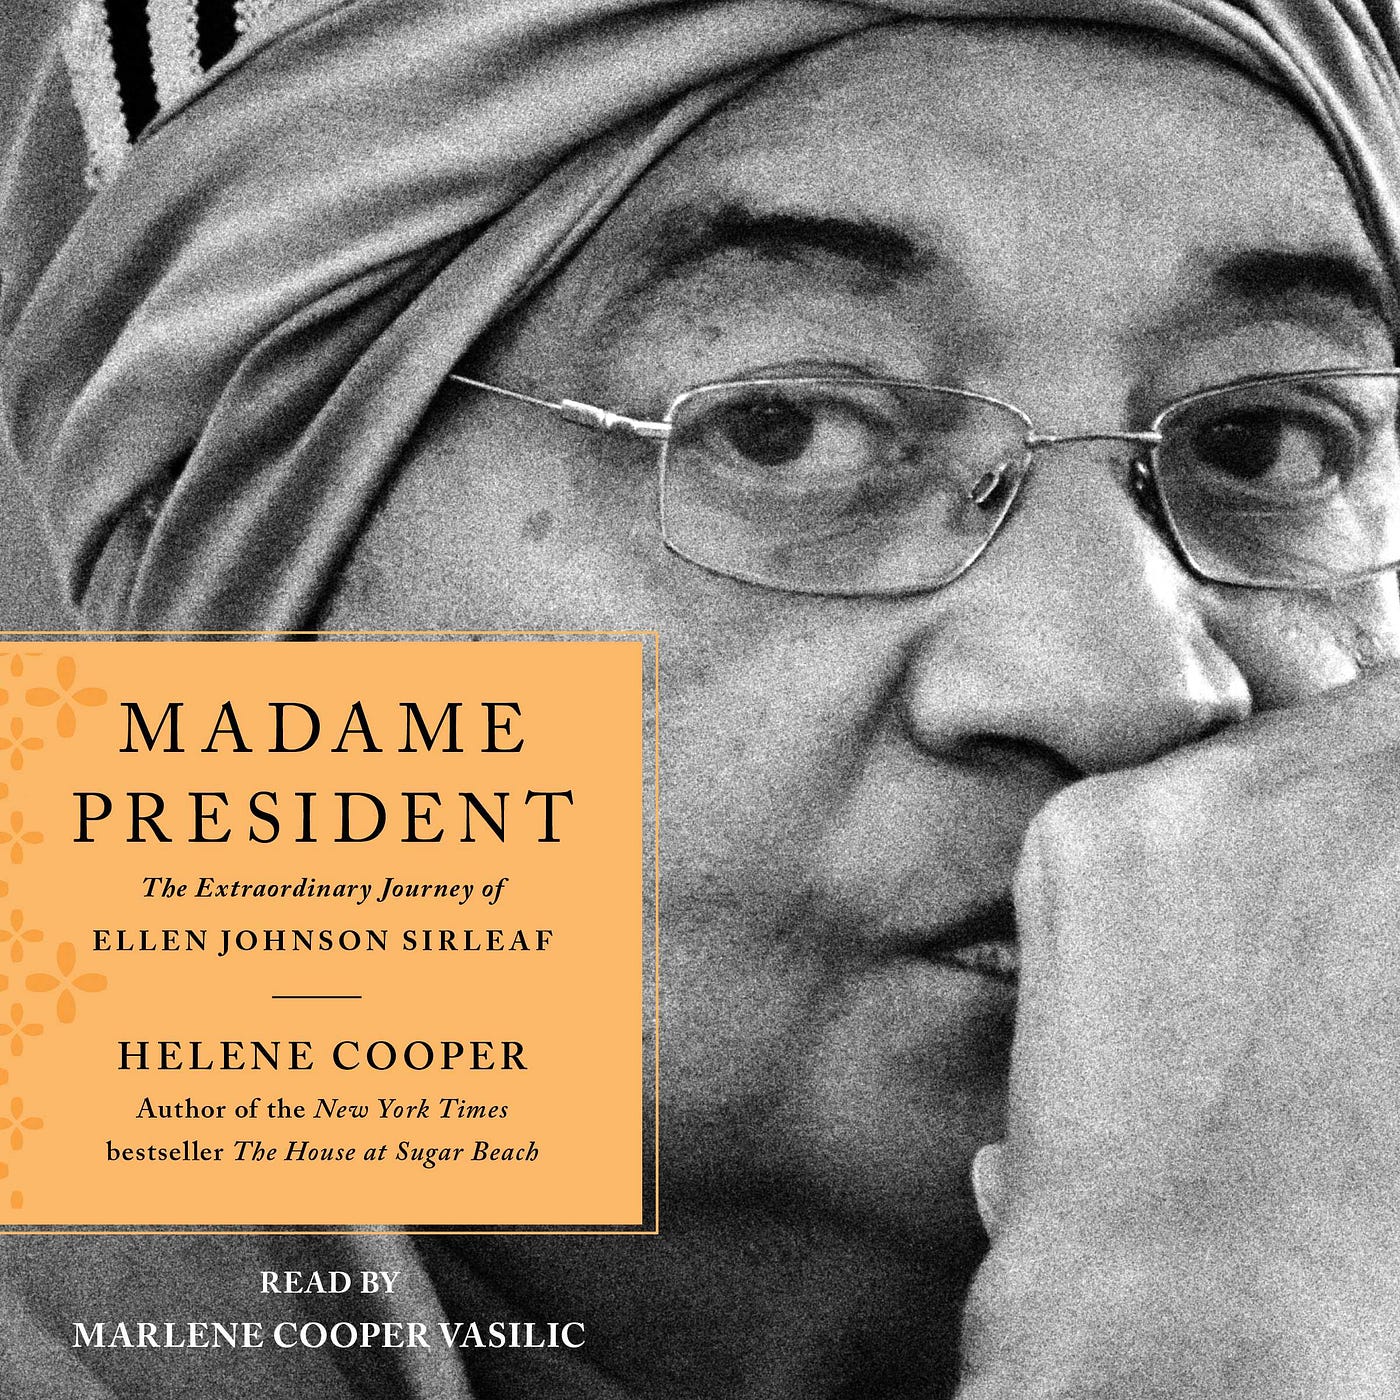 Top Quotes “Madame President The Extraordinary Journey of Ellen Johnson Sirleaf”